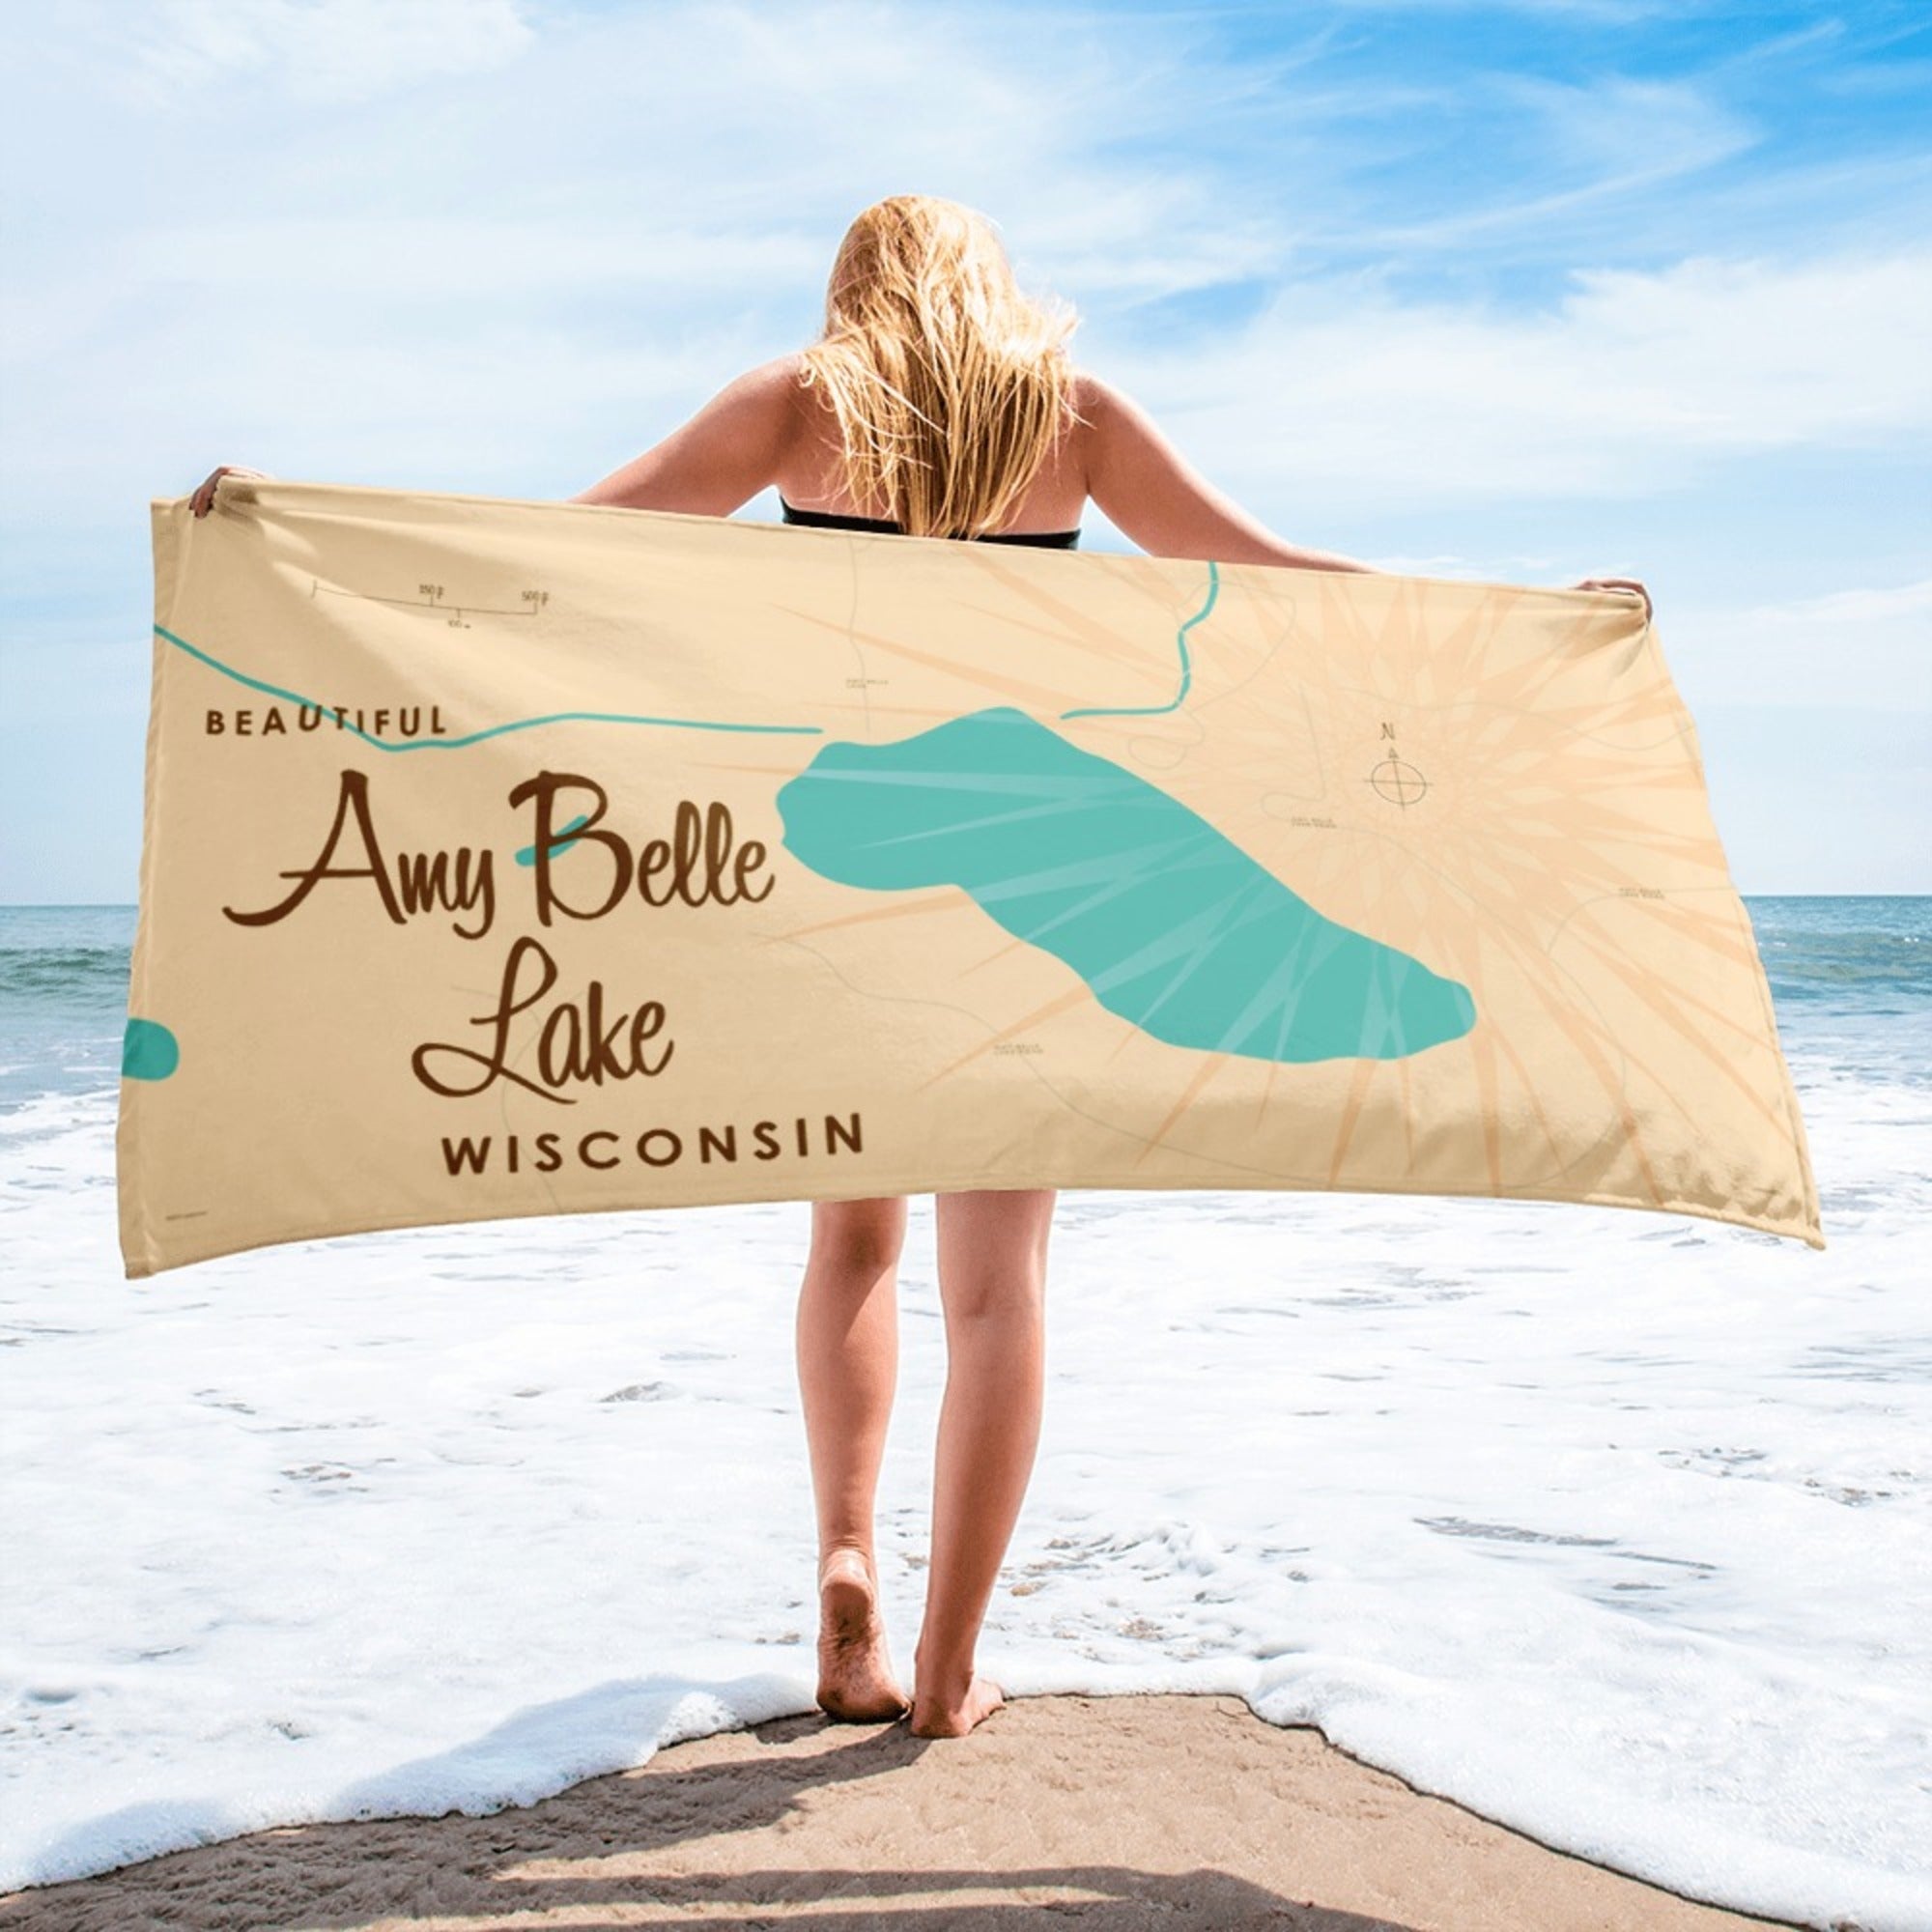 Amy Belle Lake Wisconsin Beach Towel